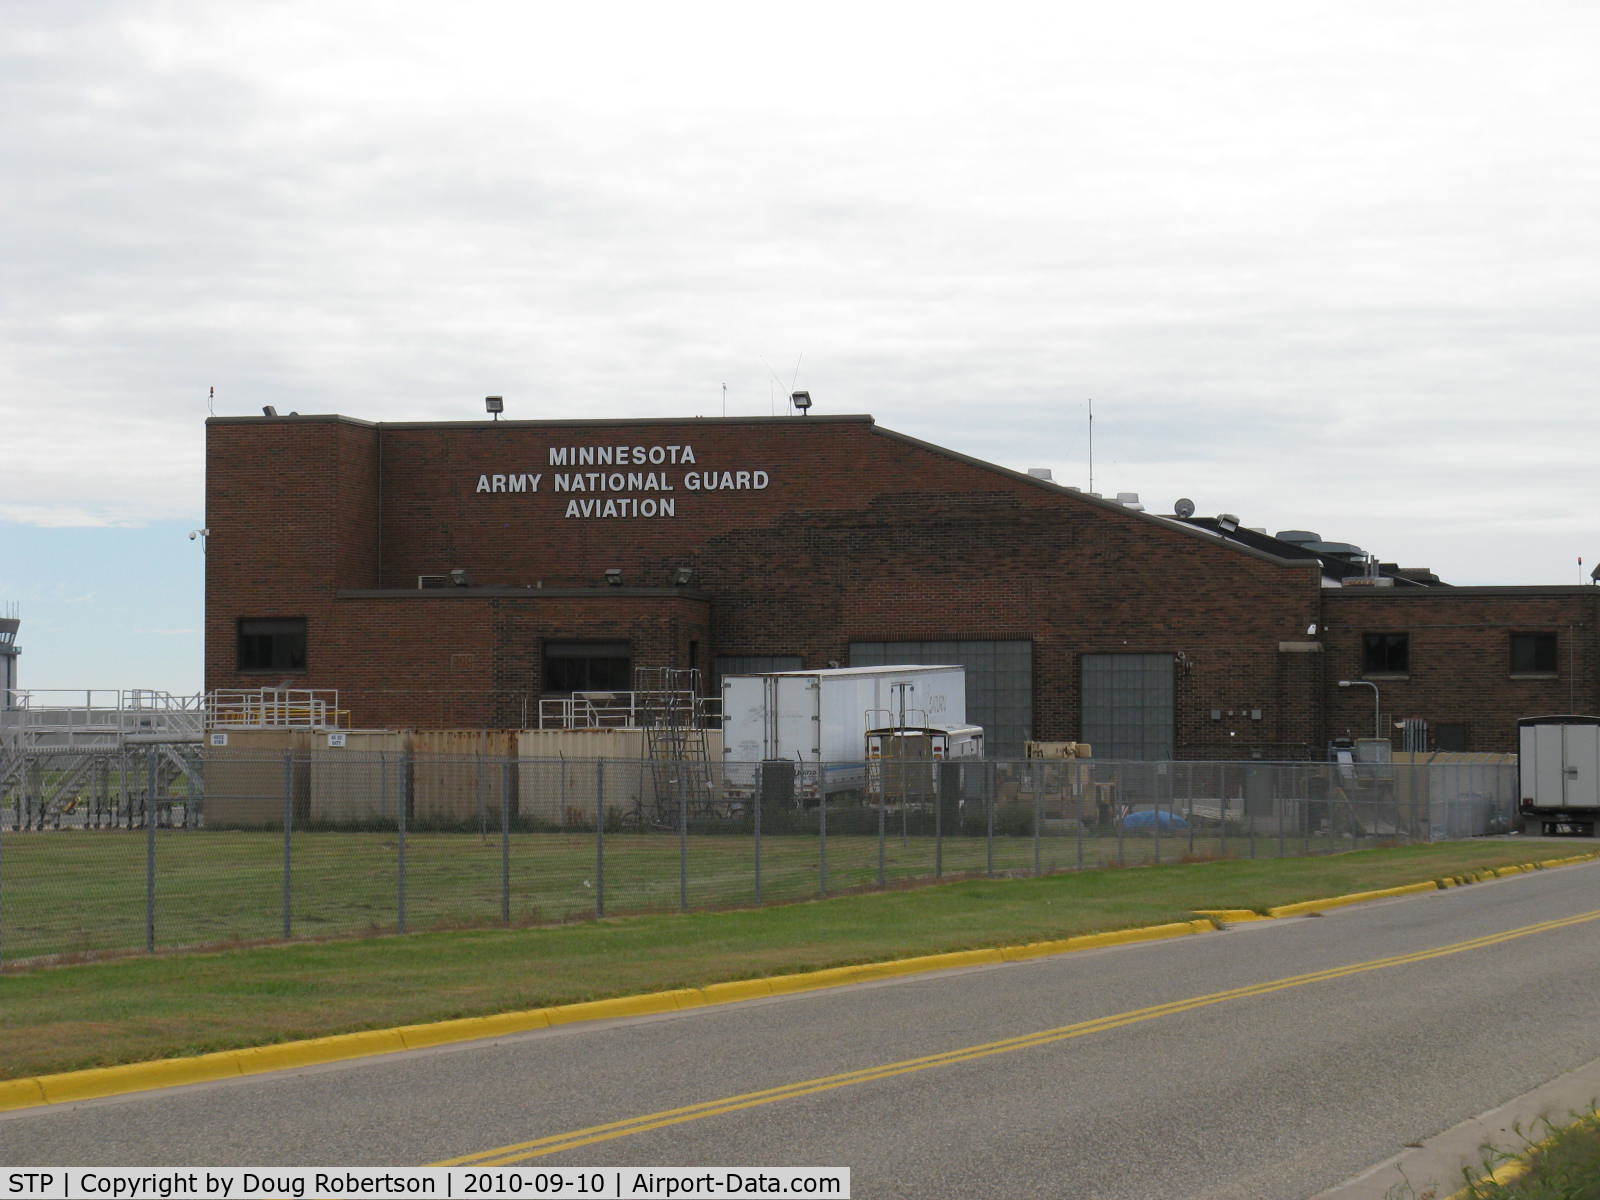 St Paul Downtown Holman Fld Airport (STP) - Minnesota Army National Guard Aviation Building